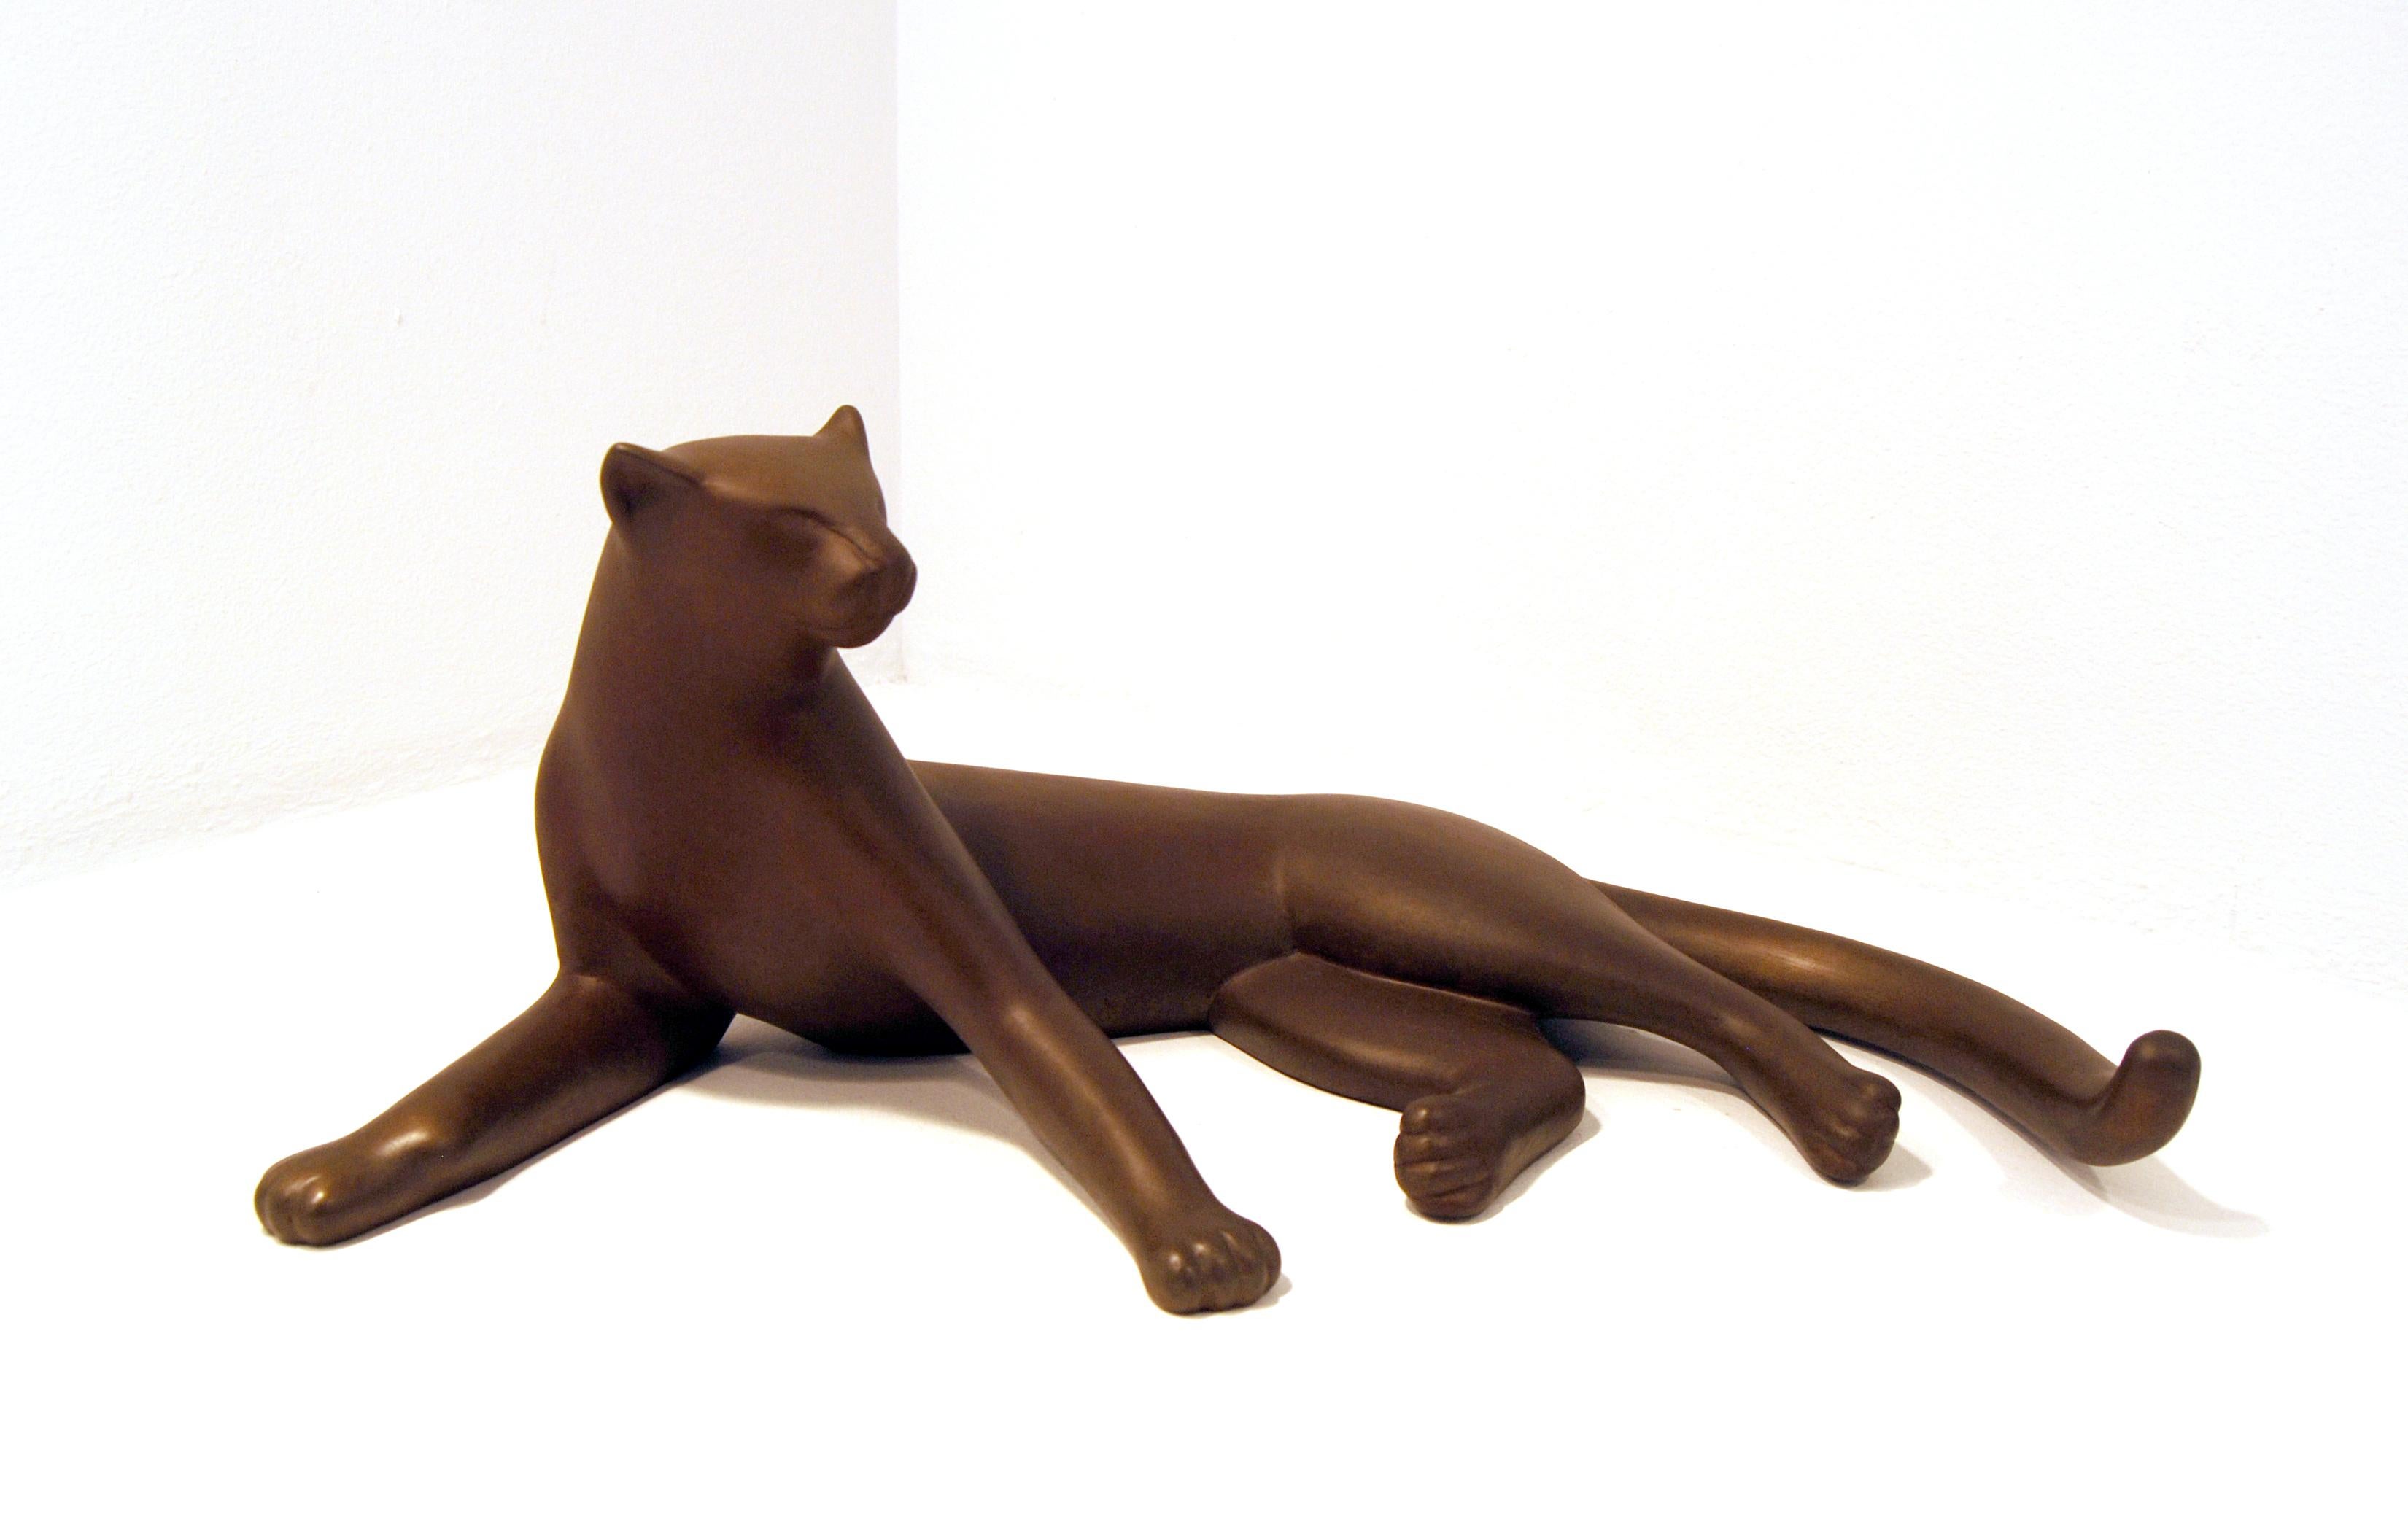 Gwynn Murrill Figurative Sculpture - Lying Panther Maquette